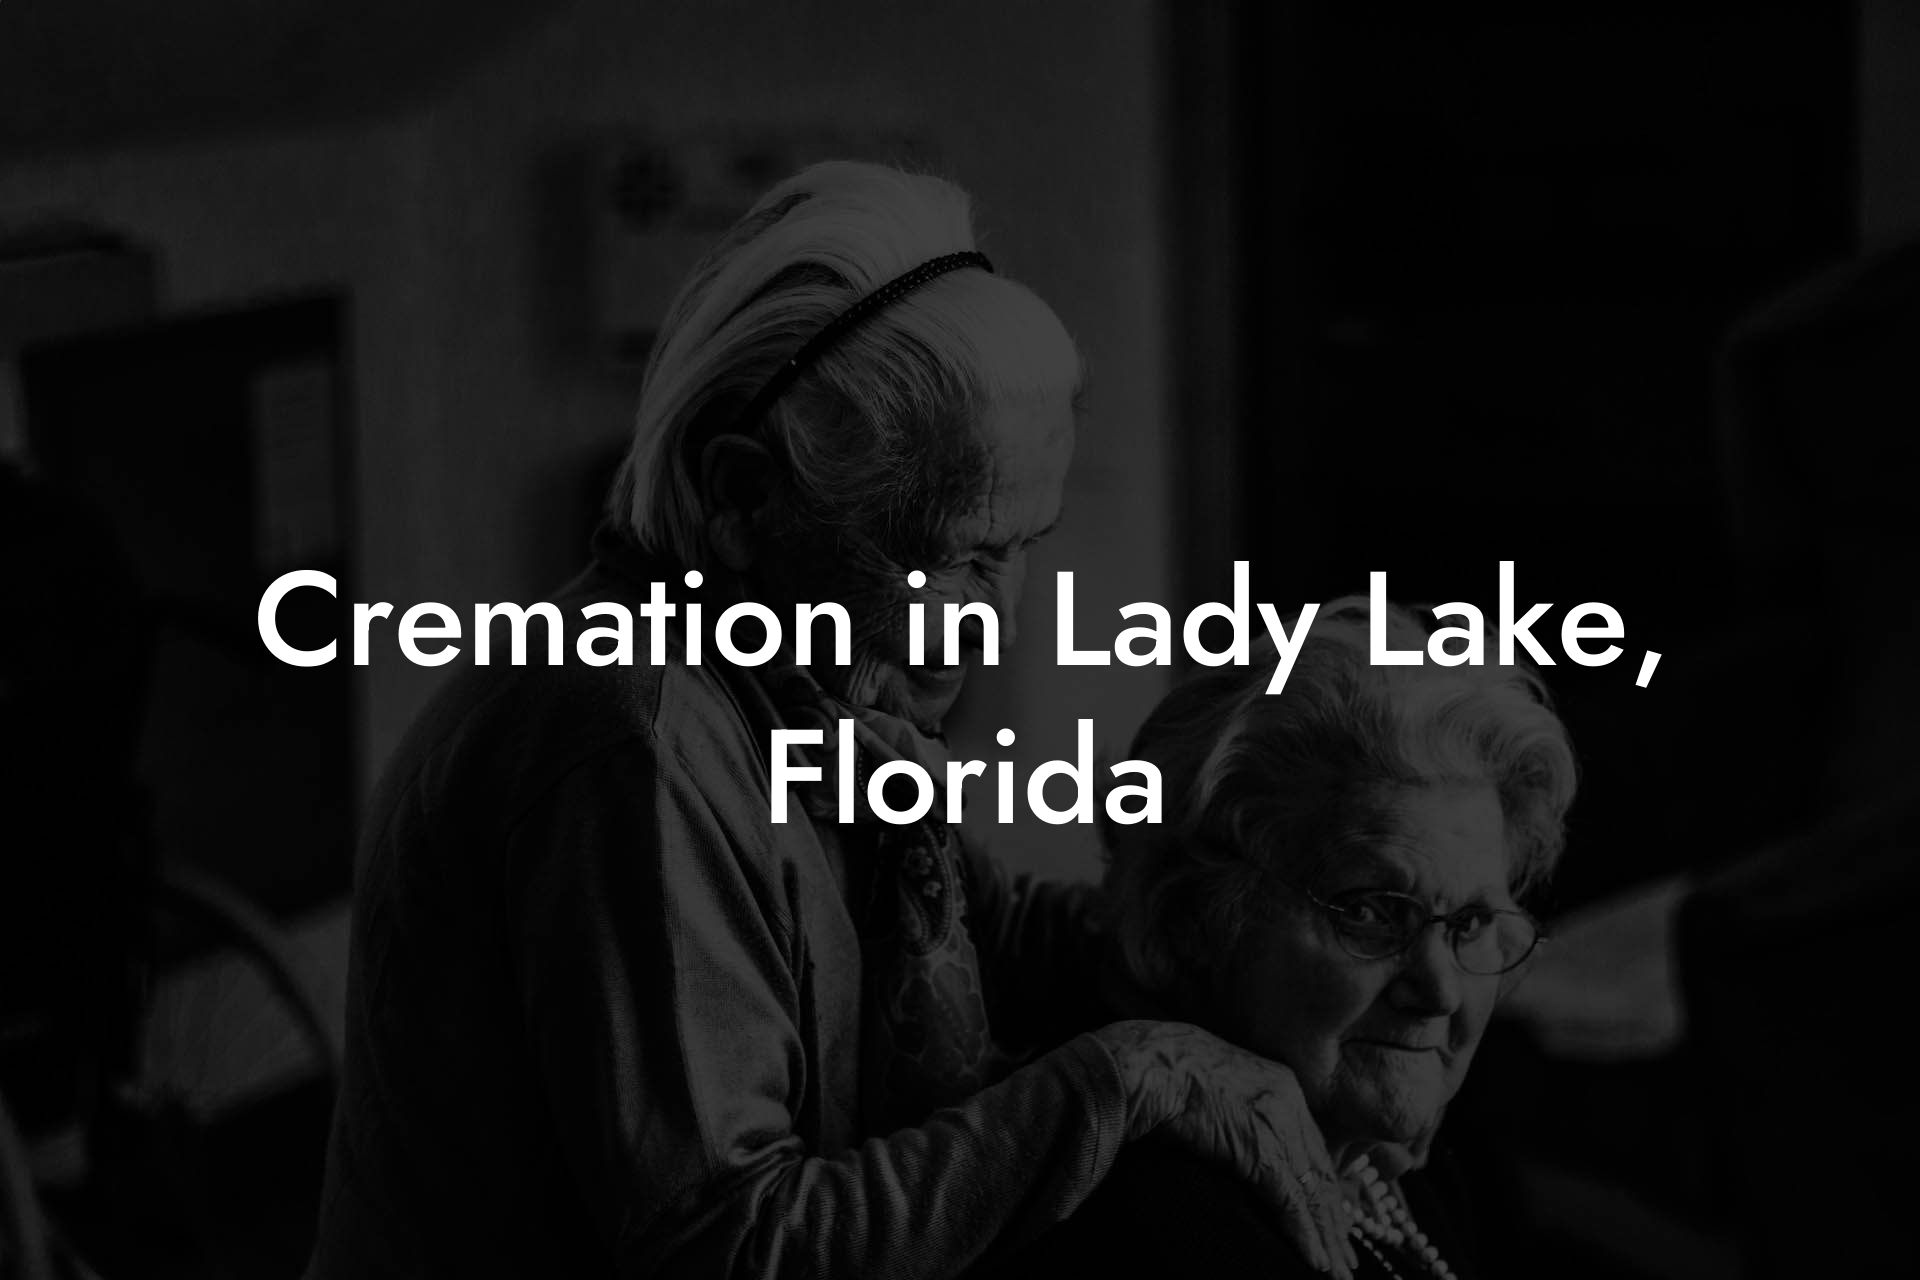 Cremation in Lady Lake, Florida